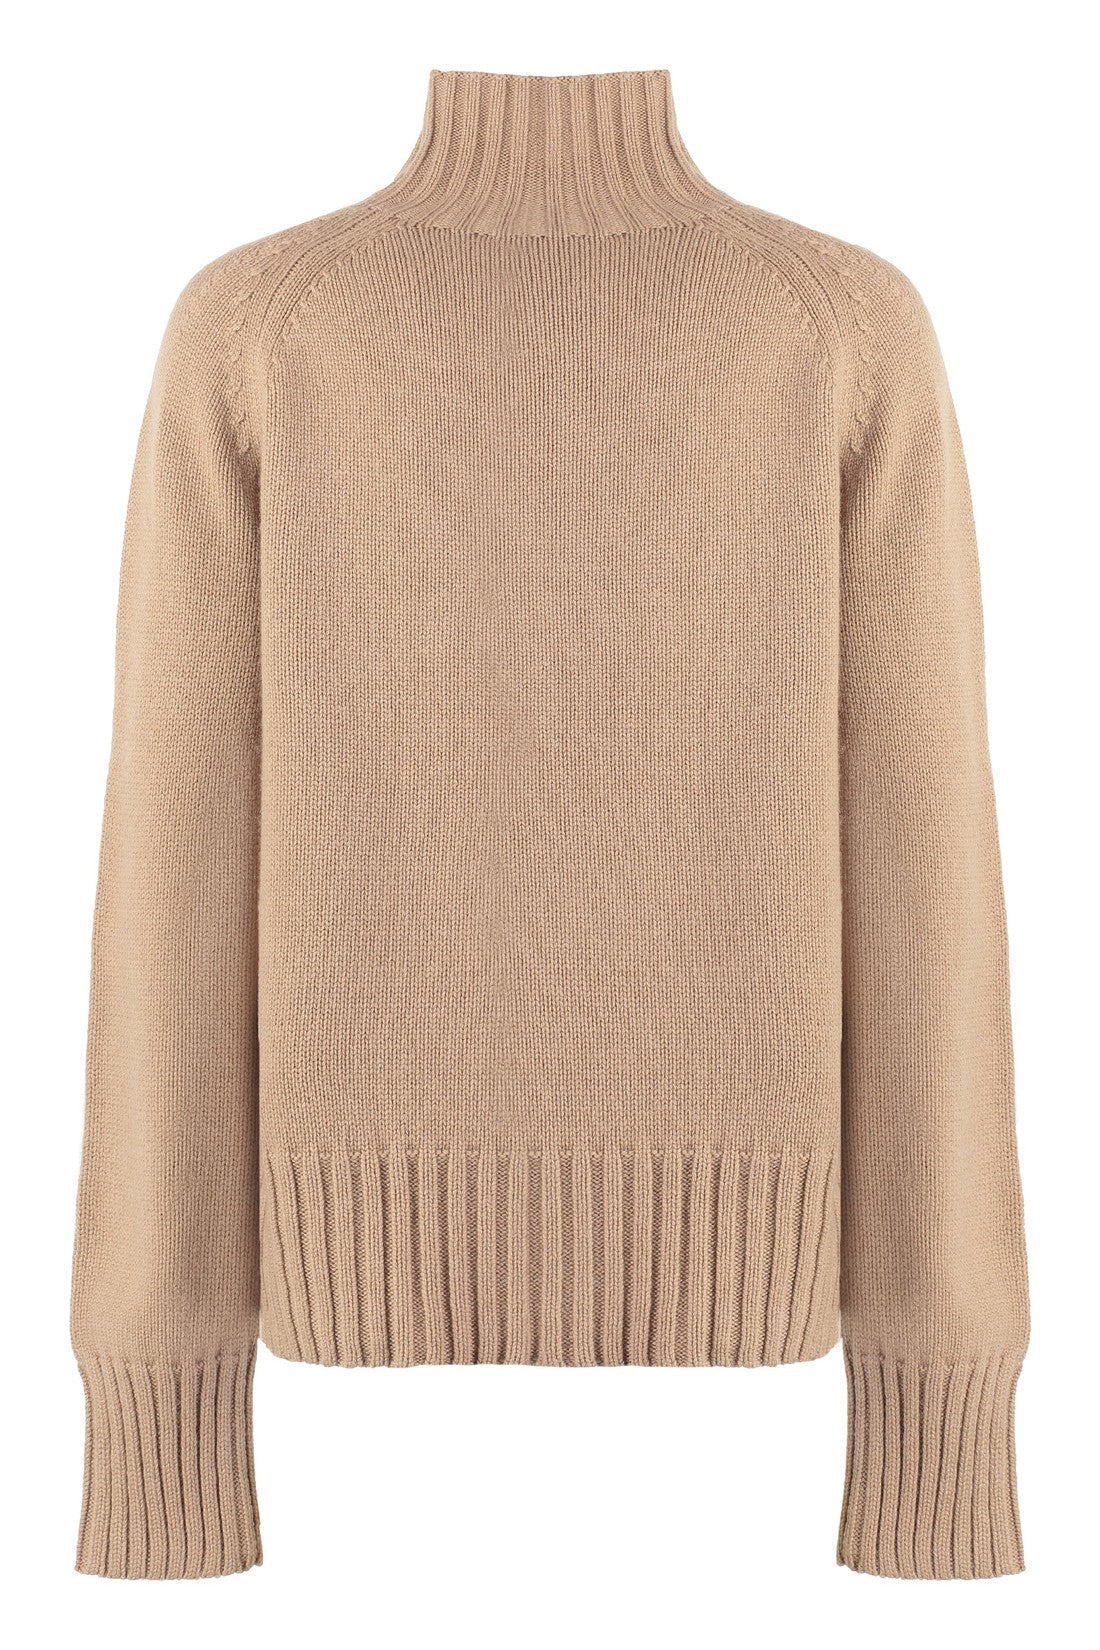 S MAX MARA-OUTLET-SALE-Mantova Wool blend turtleneck sweater-ARCHIVIST